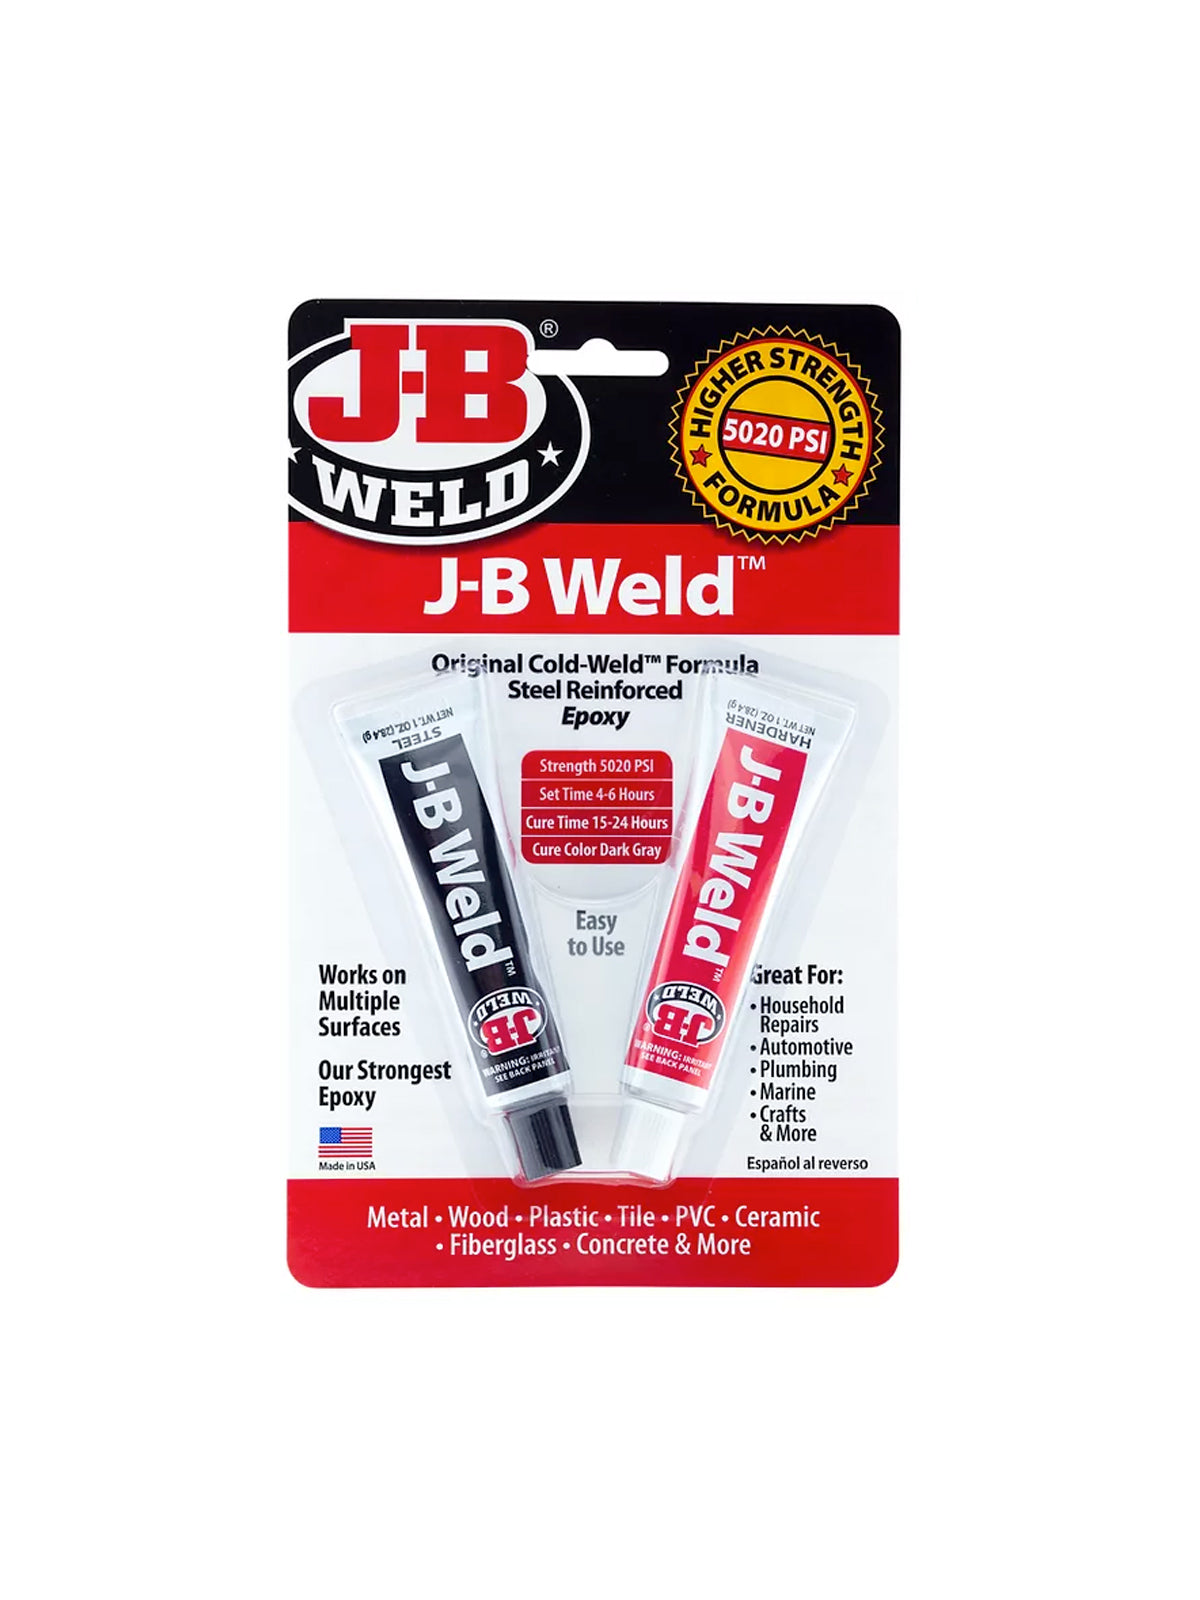 JB Weld Original Cold-Weld™ Epoxy in packaging